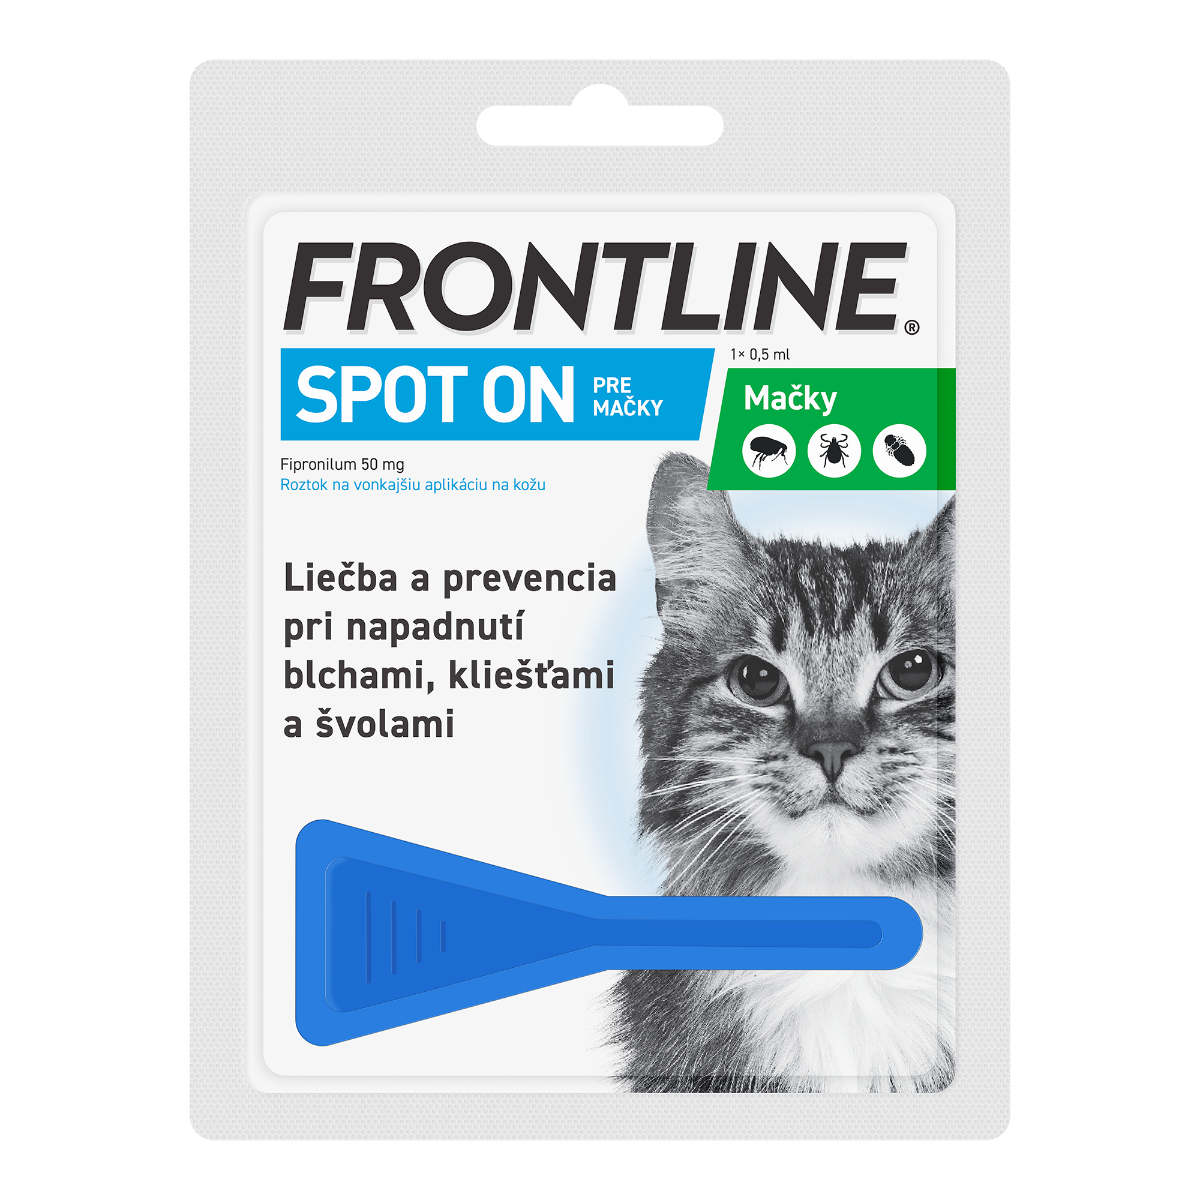 Frontline Spot-on pre mačky sol 0.5 ml